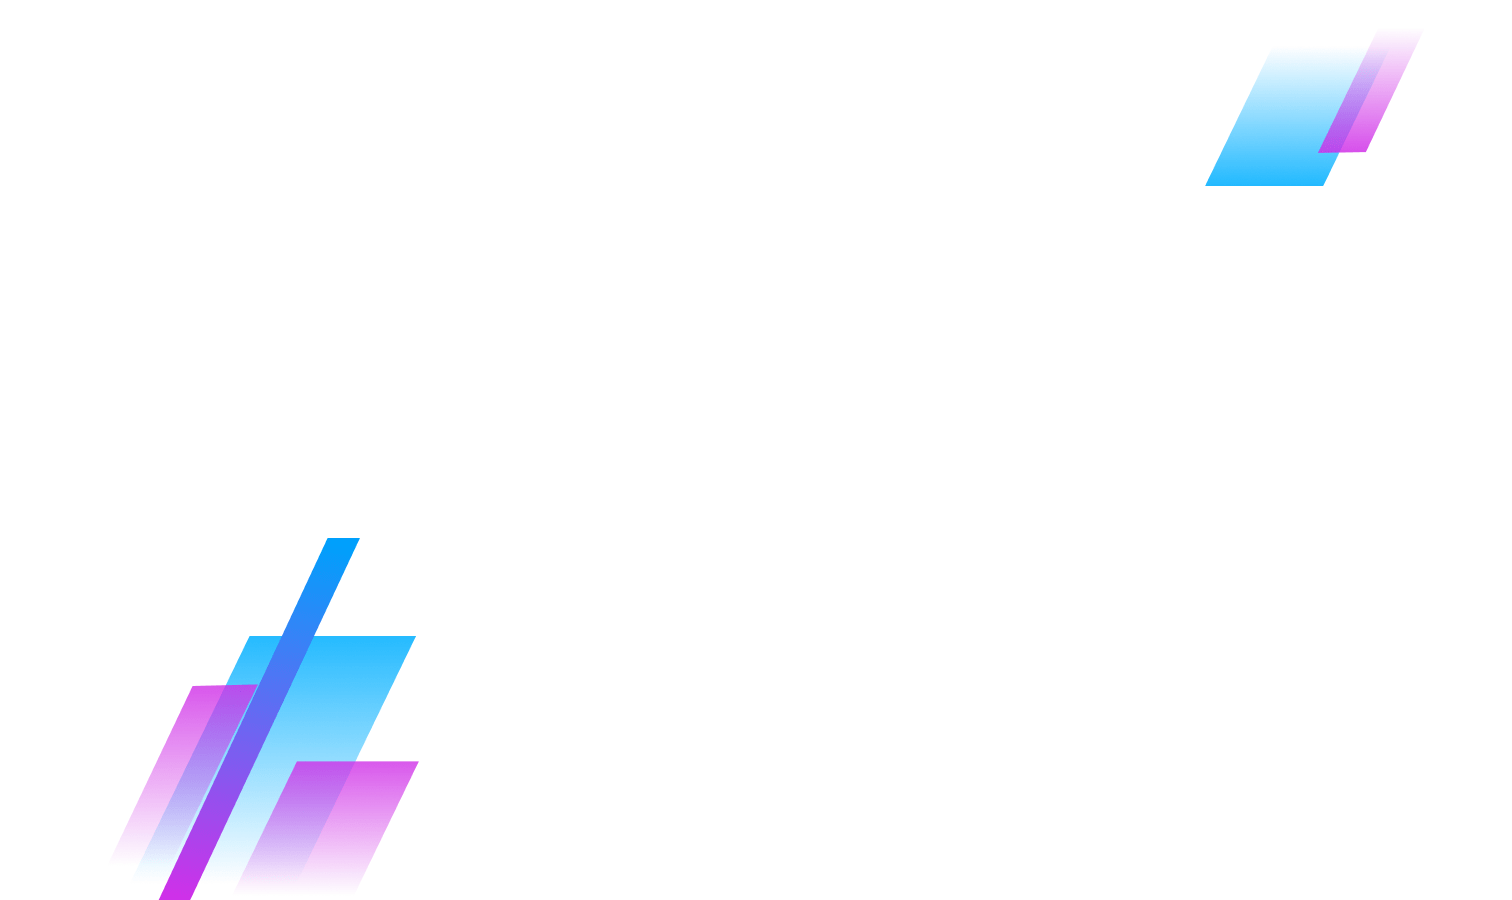 Summit wordmark